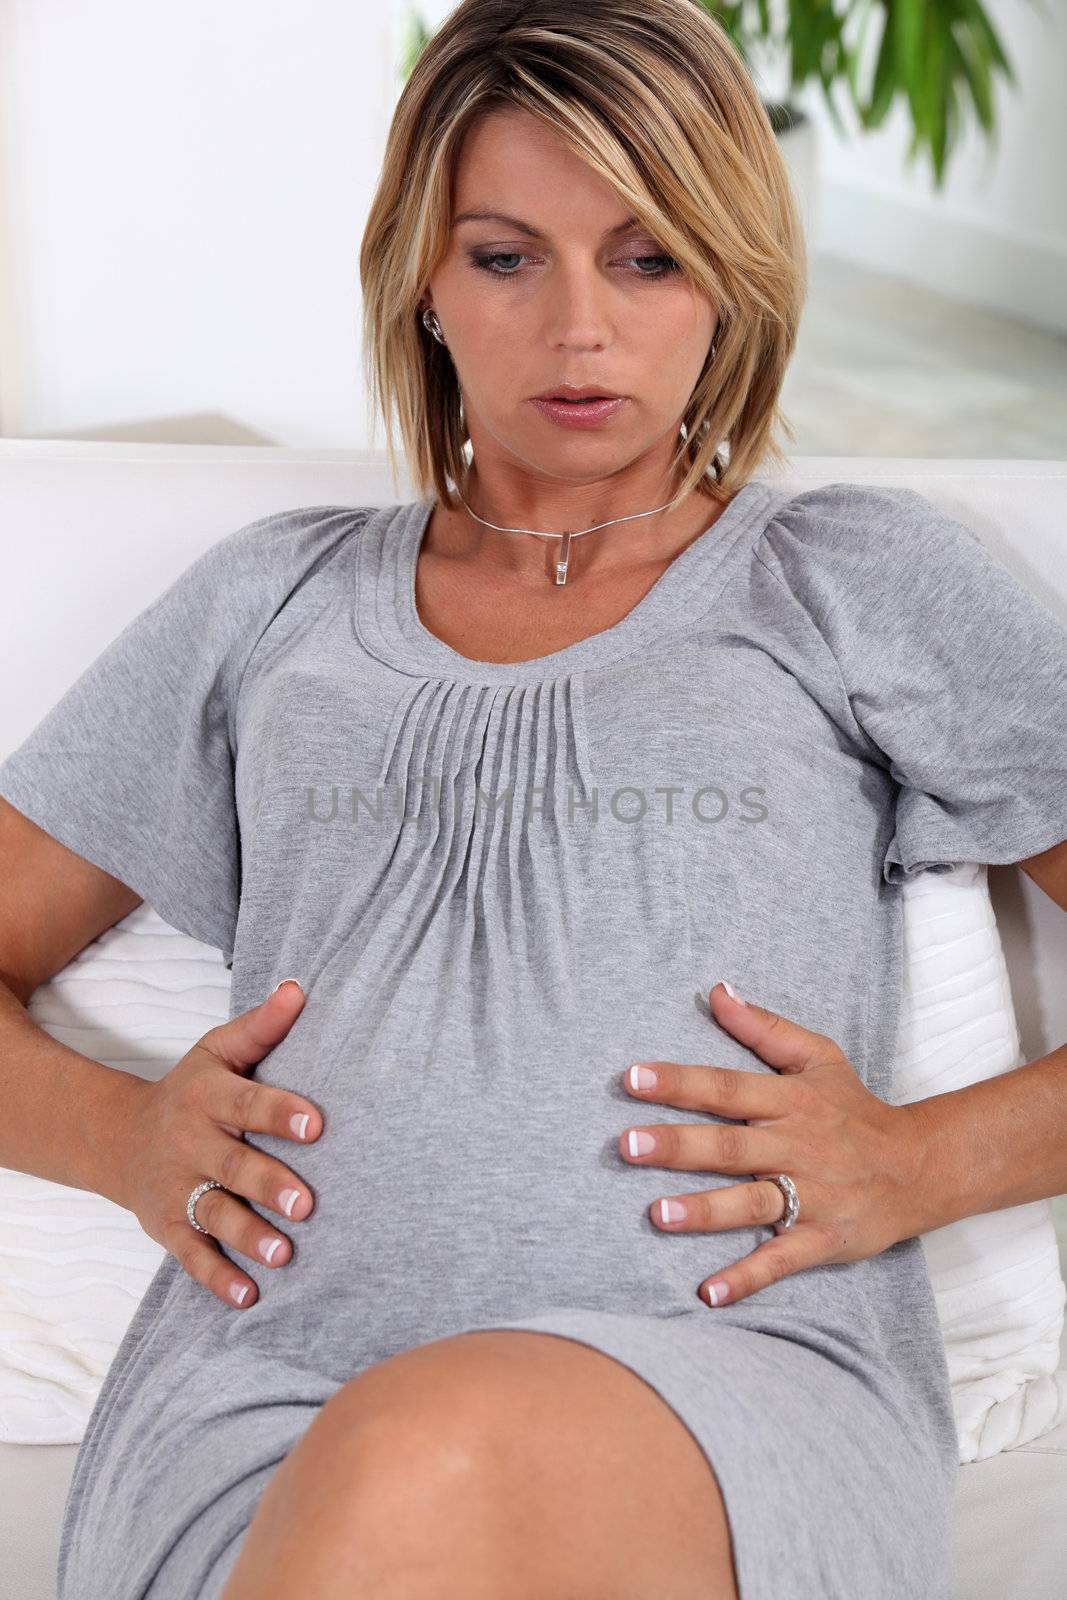 pregnant woman by phovoir